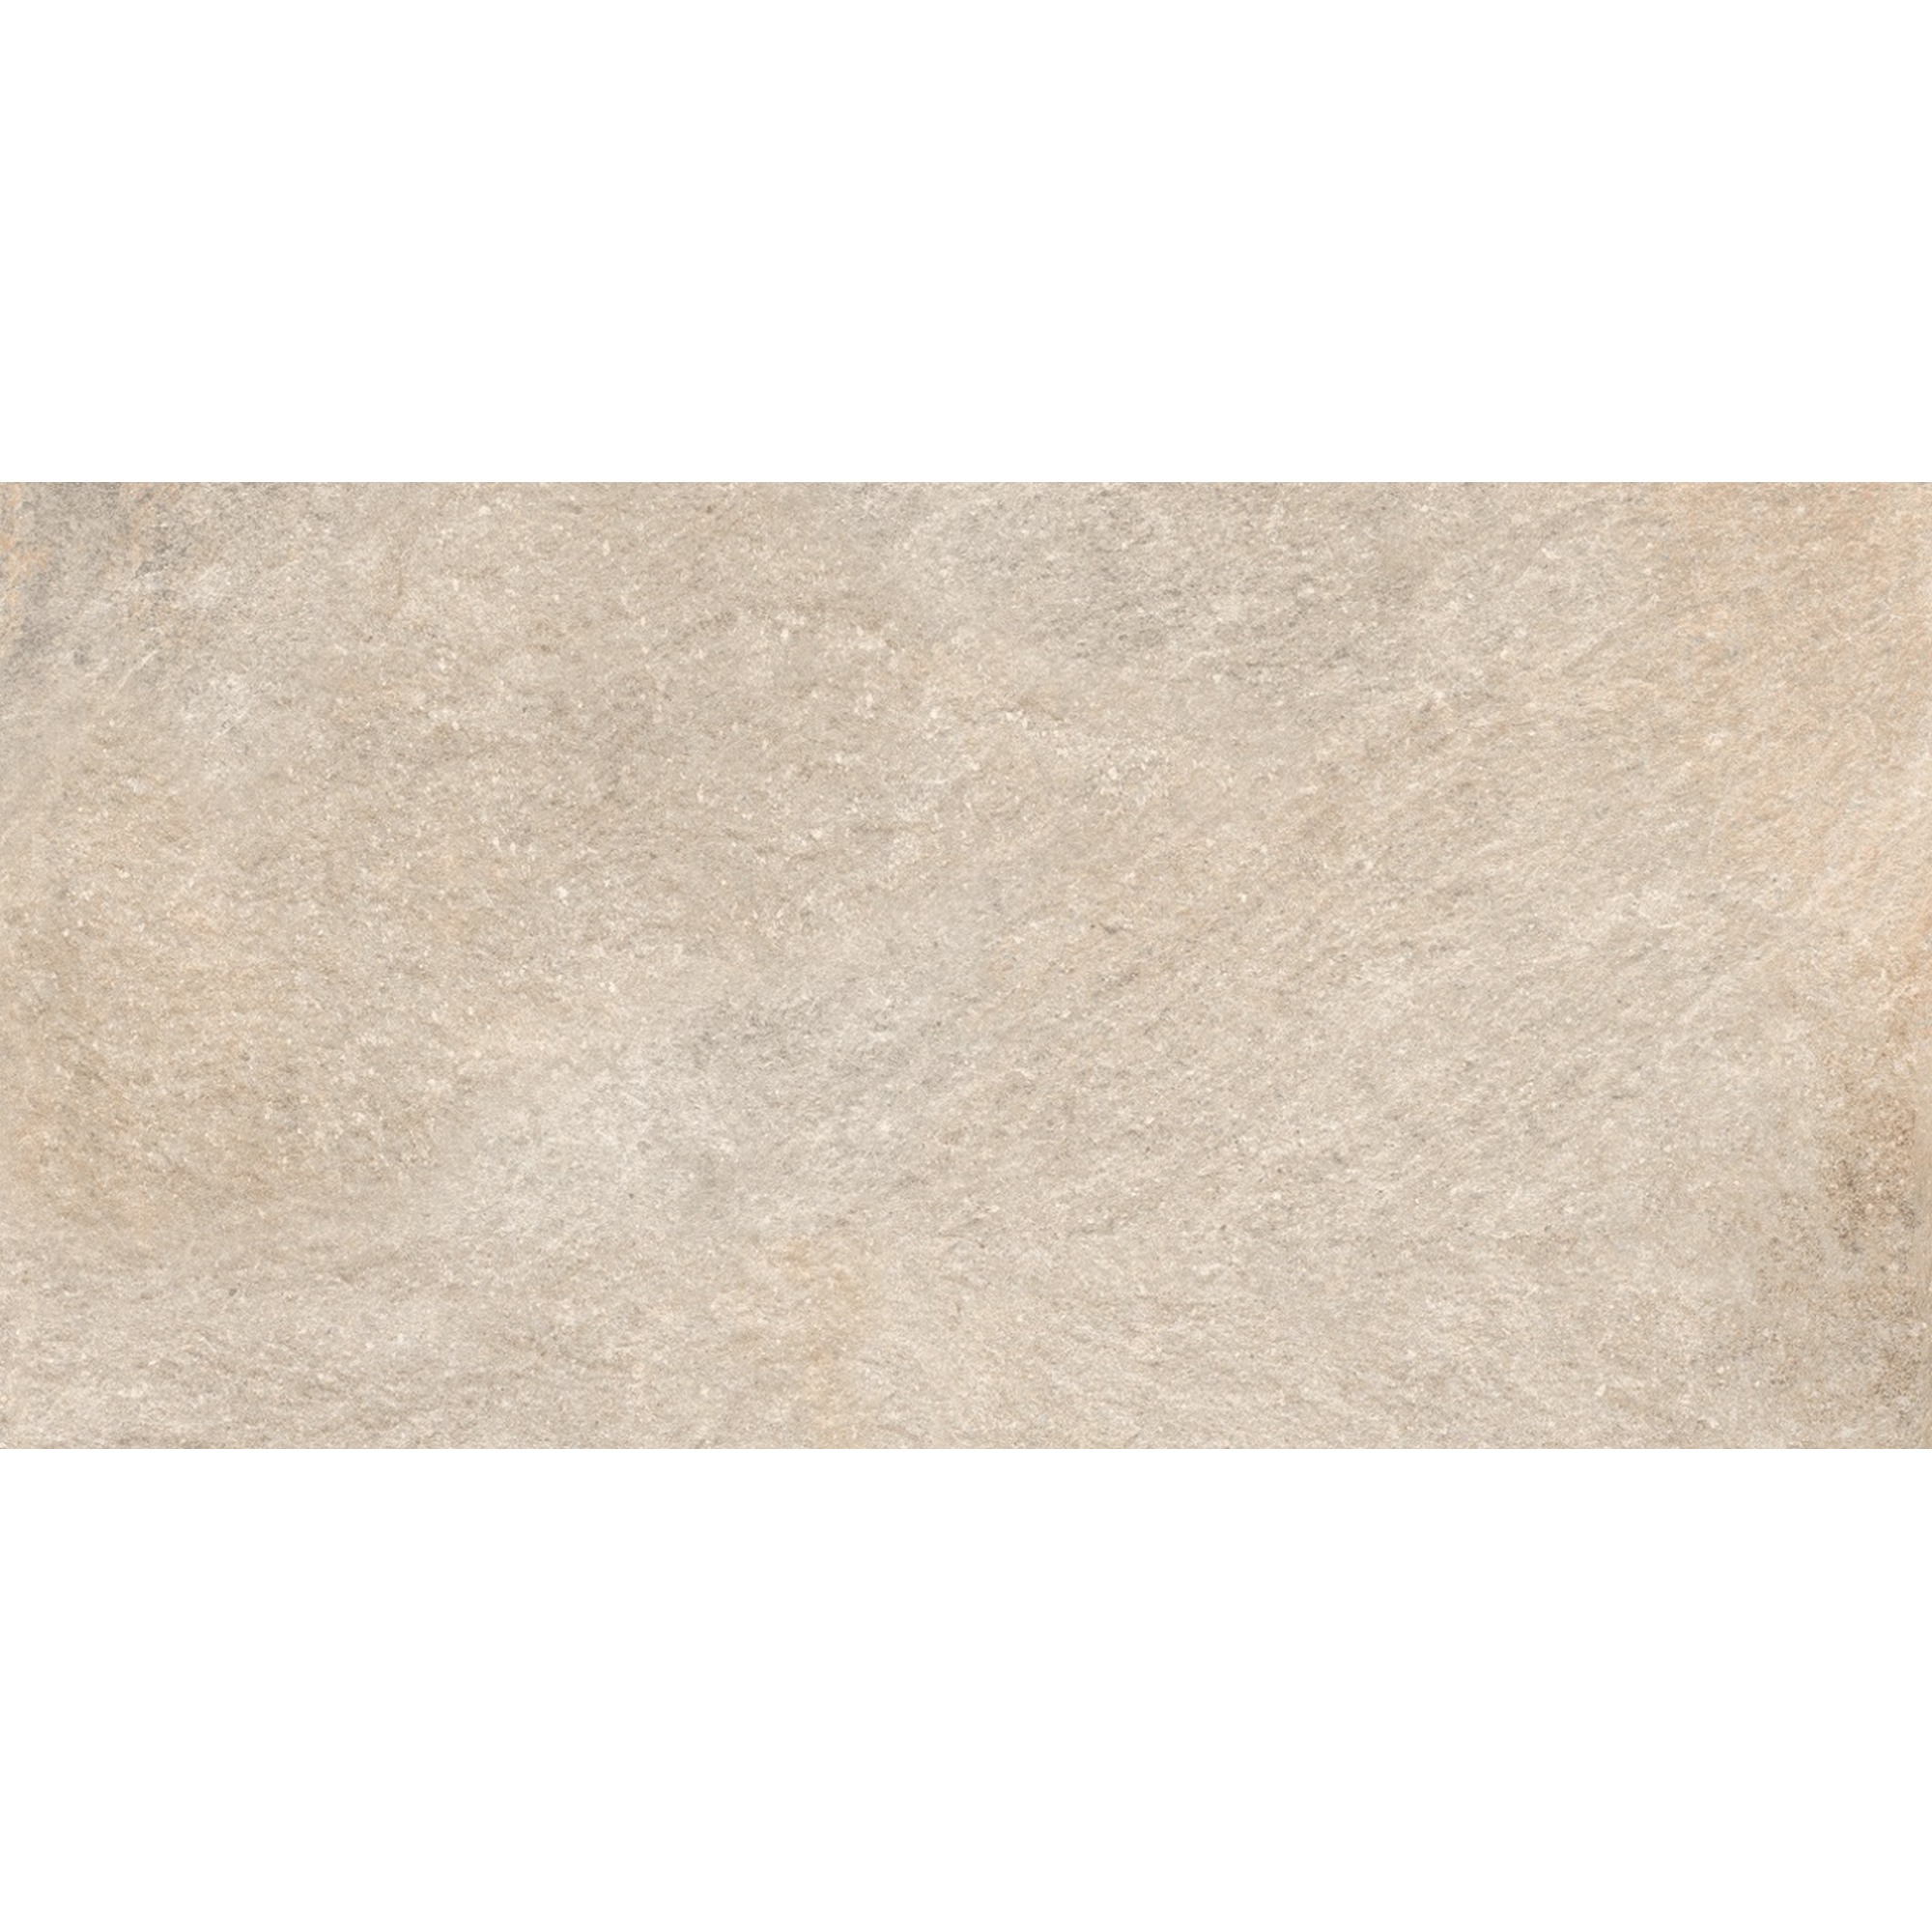 Wandfliese 'Apollo' Steingut beige 30 x 60 cm + product picture